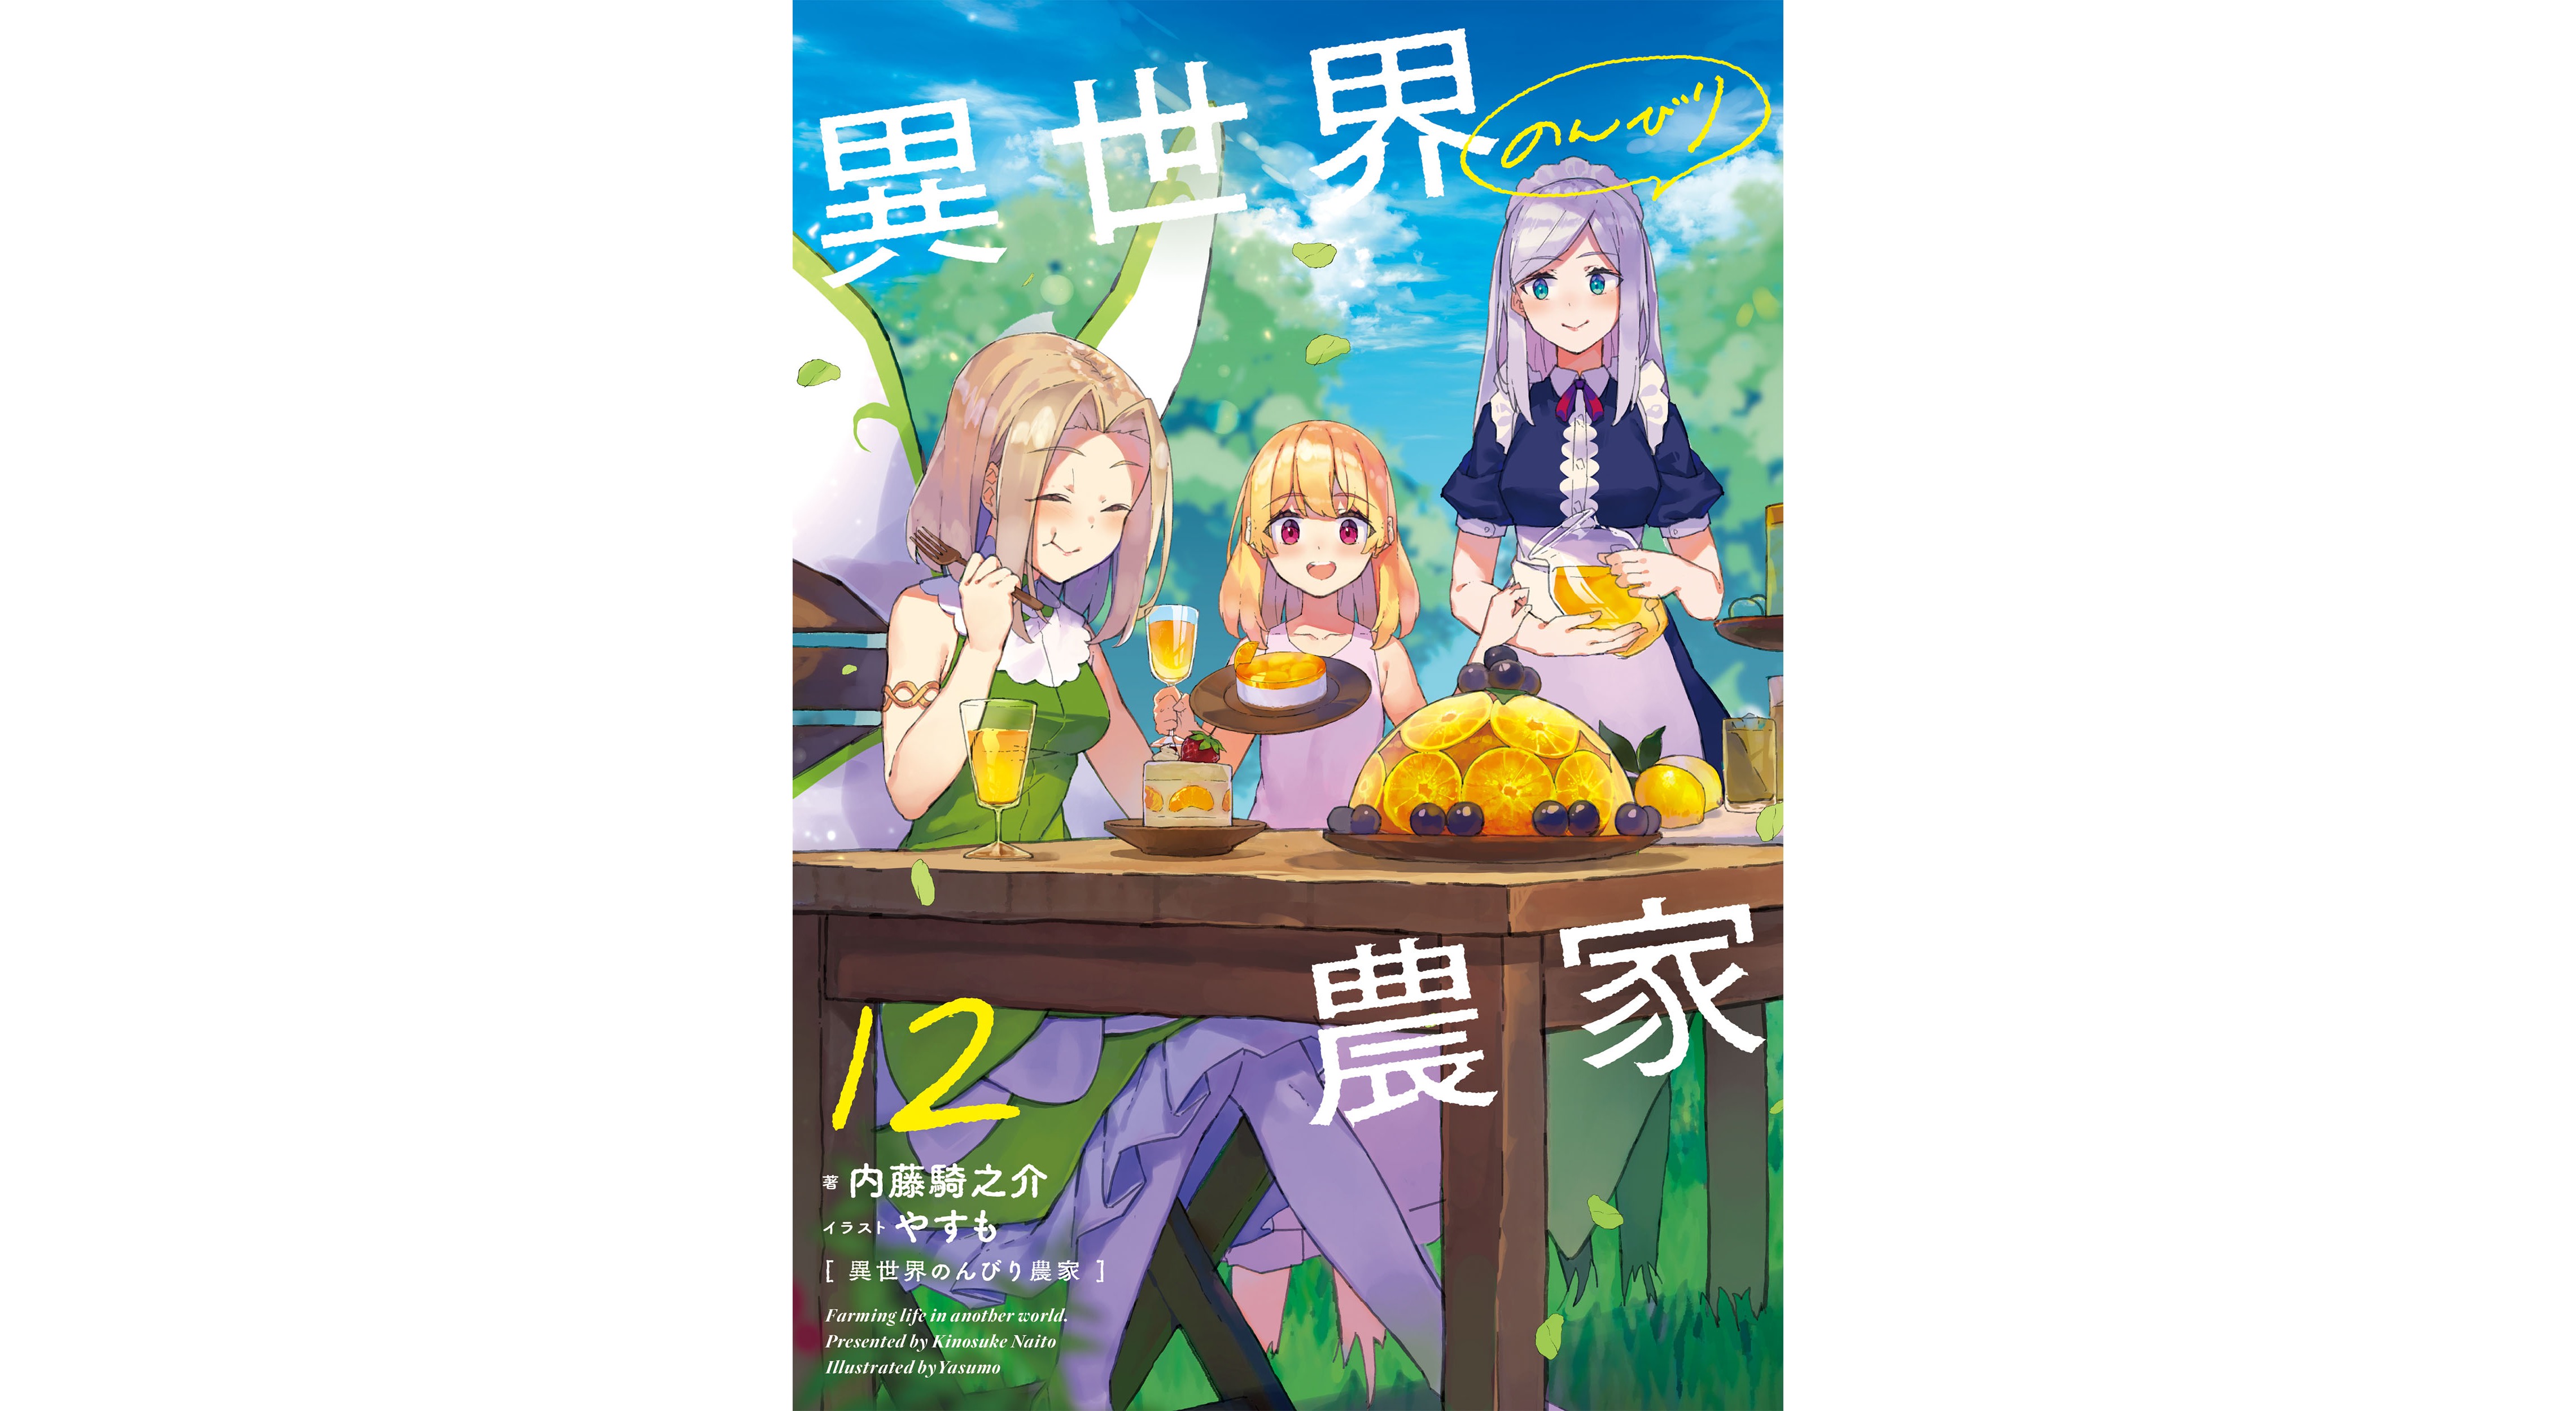 Kinosuke Naitos Farming Life in Another World Light Novels Get Anime   News  Anime News Network